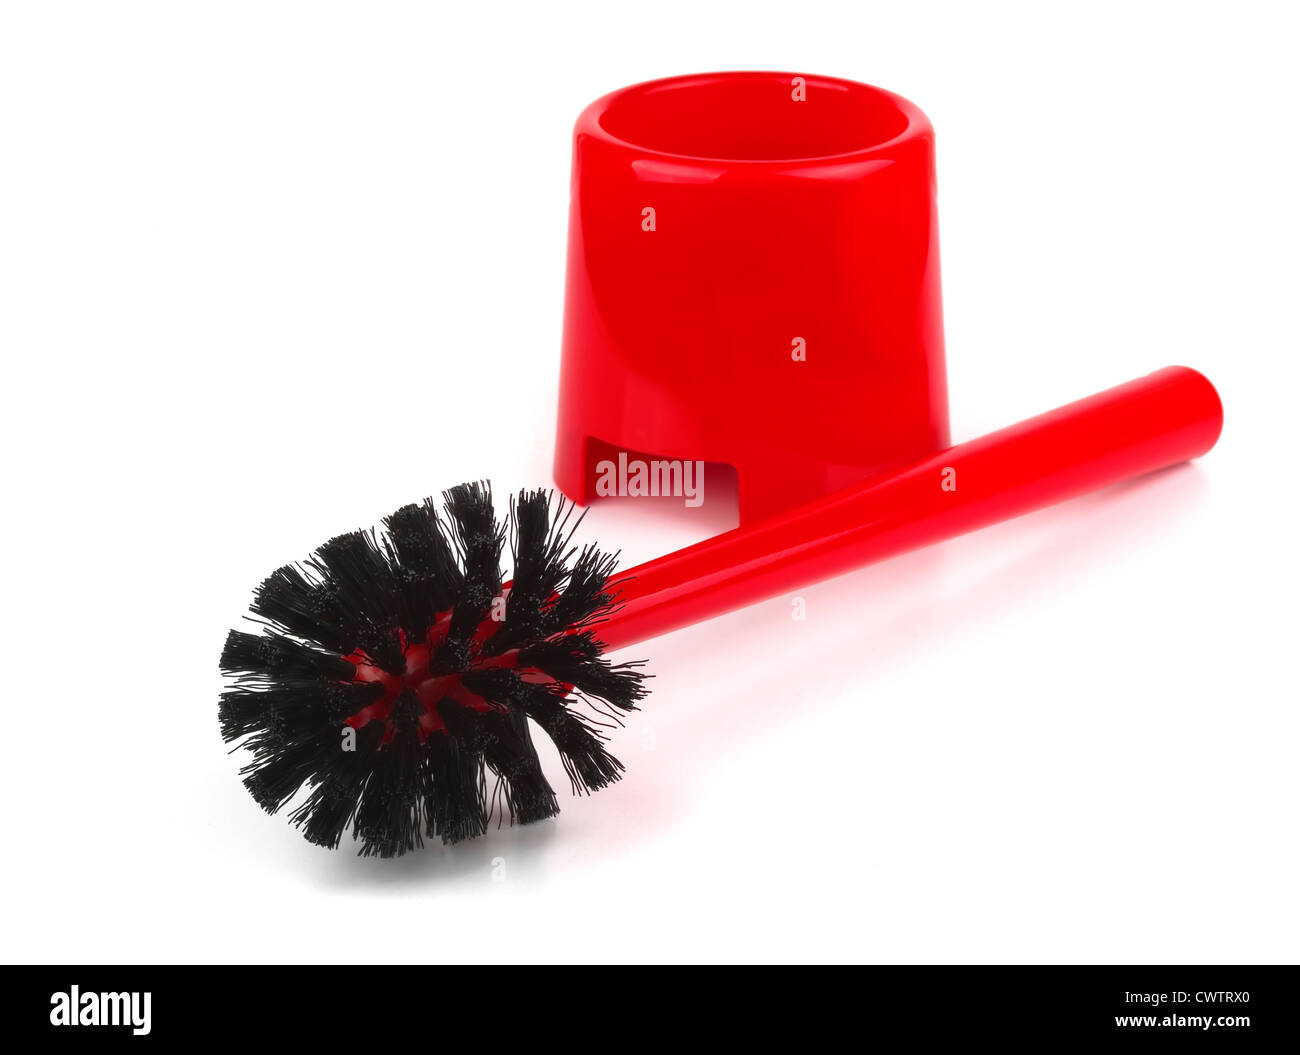 Red plastic toilet brush isolated on white Stock Photo